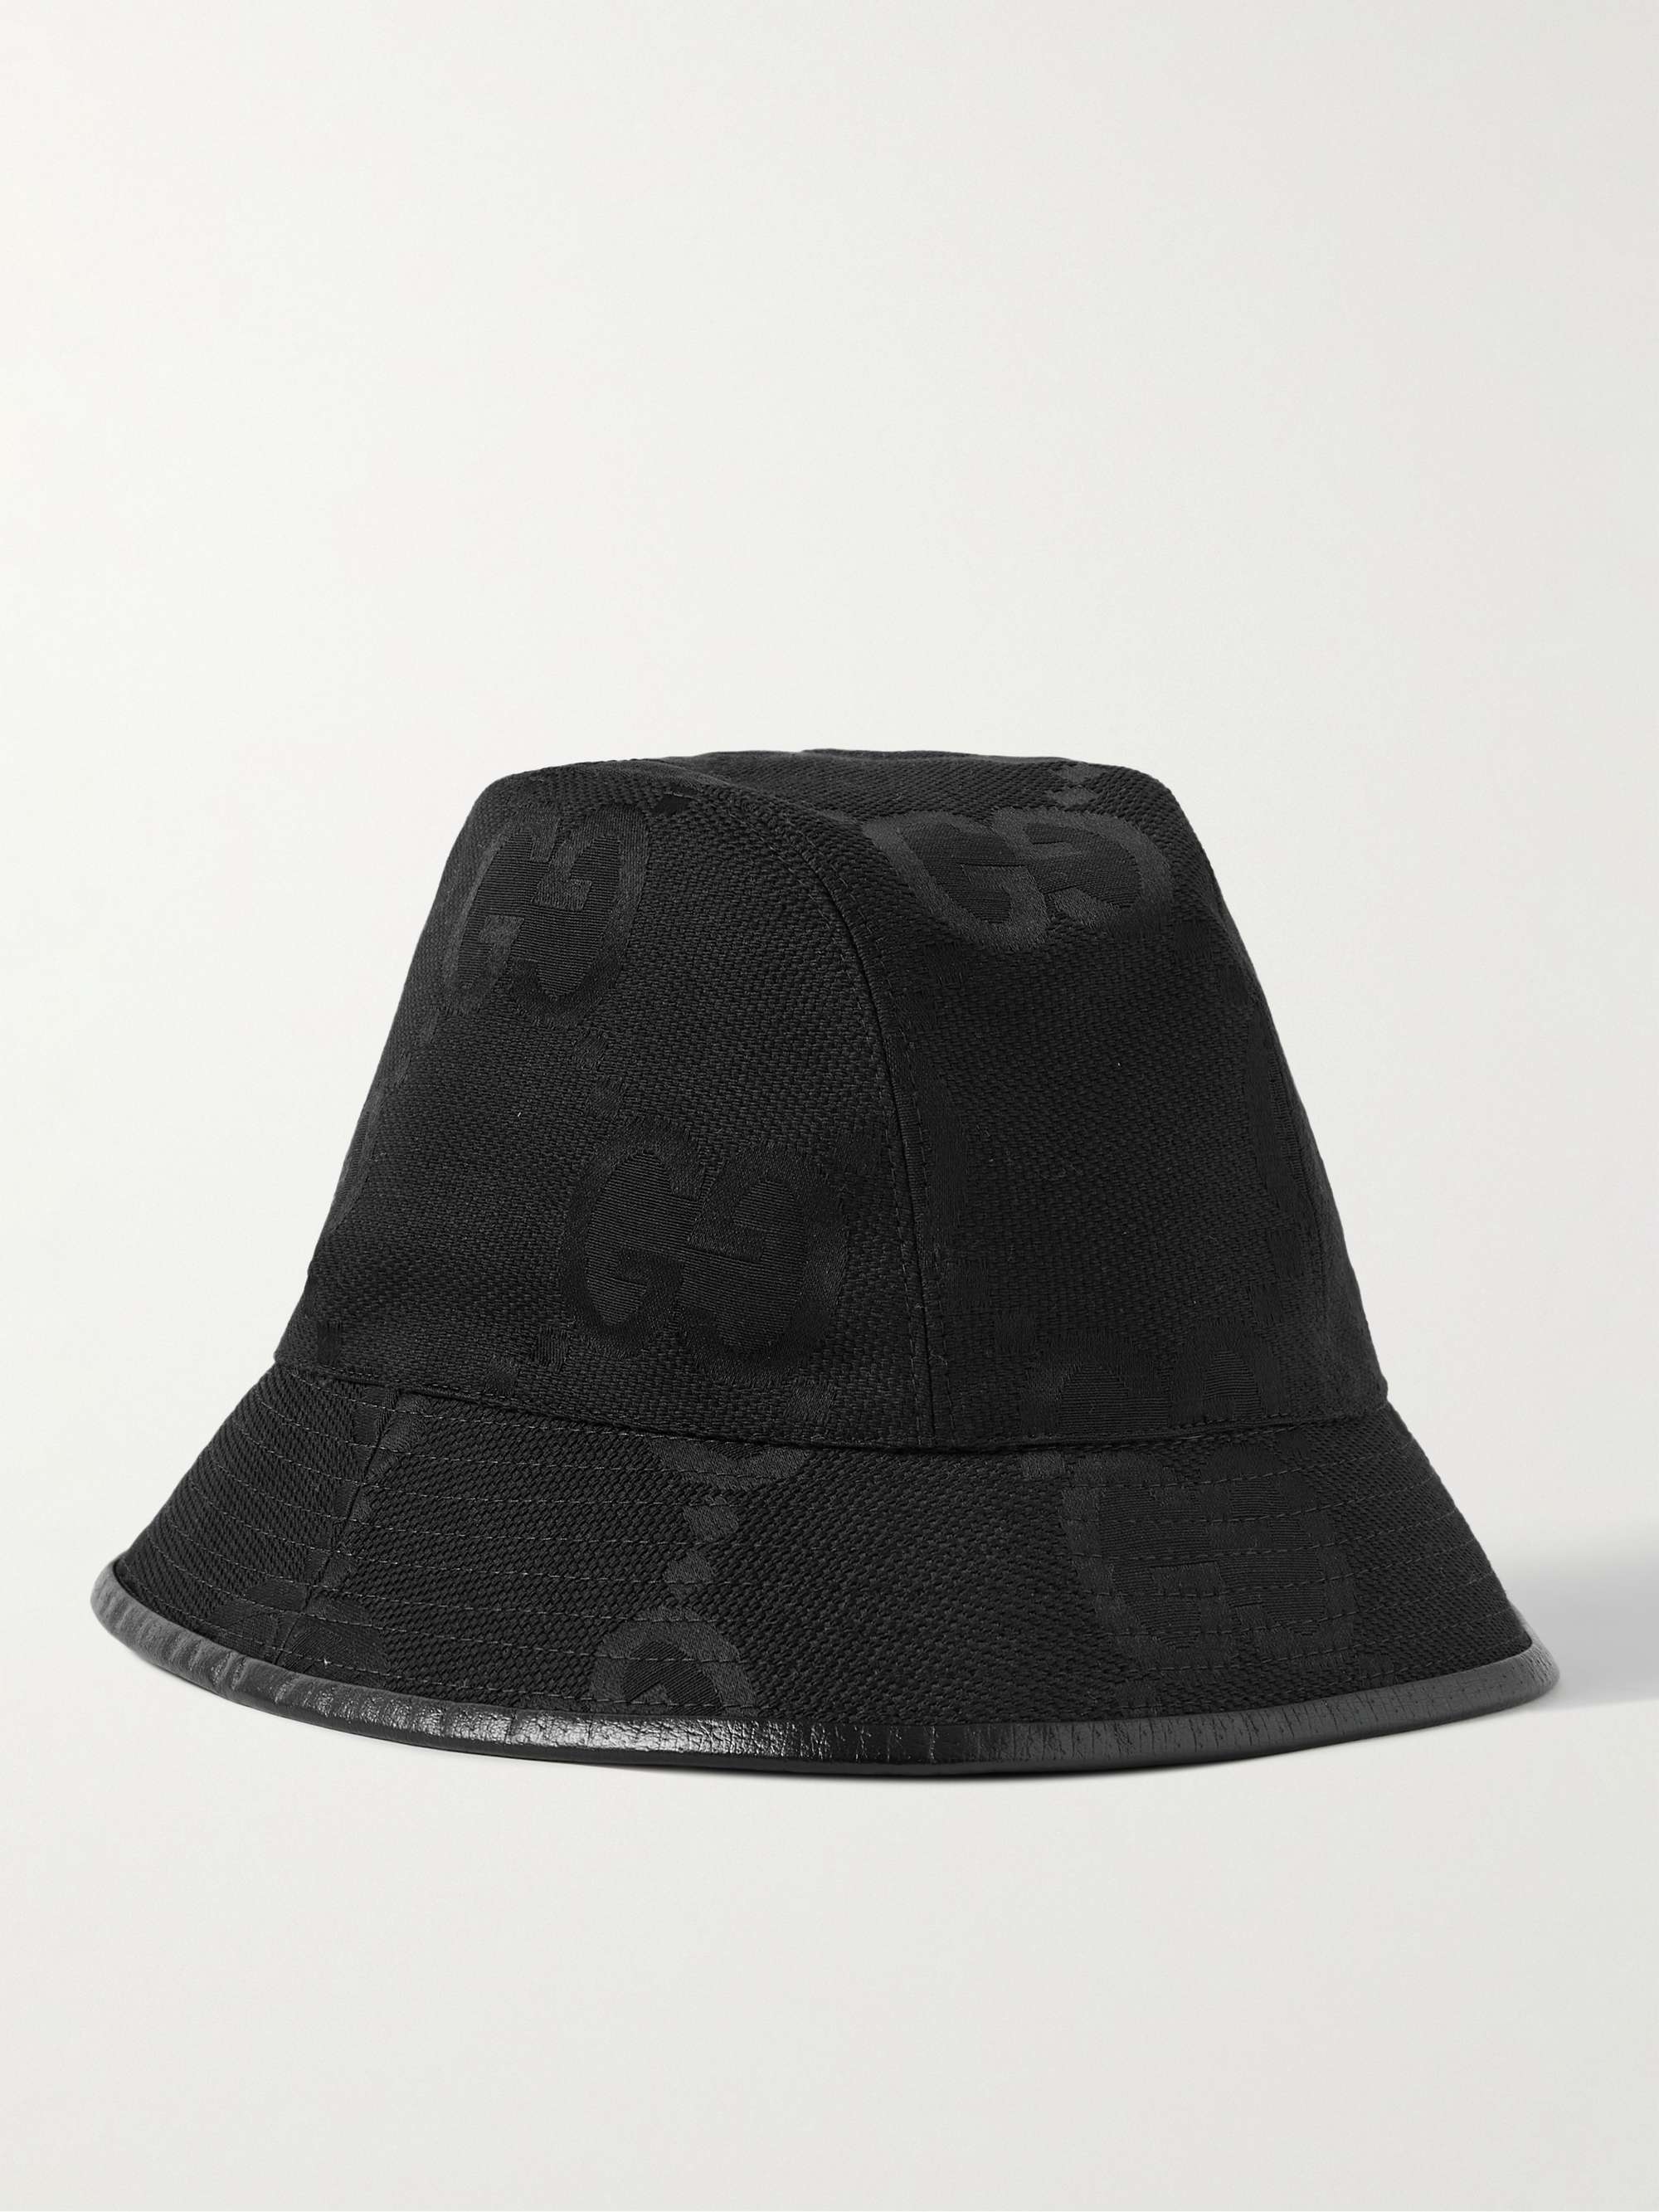 Gucci Men's GG Maxi Bucket Hat - Black - Hats